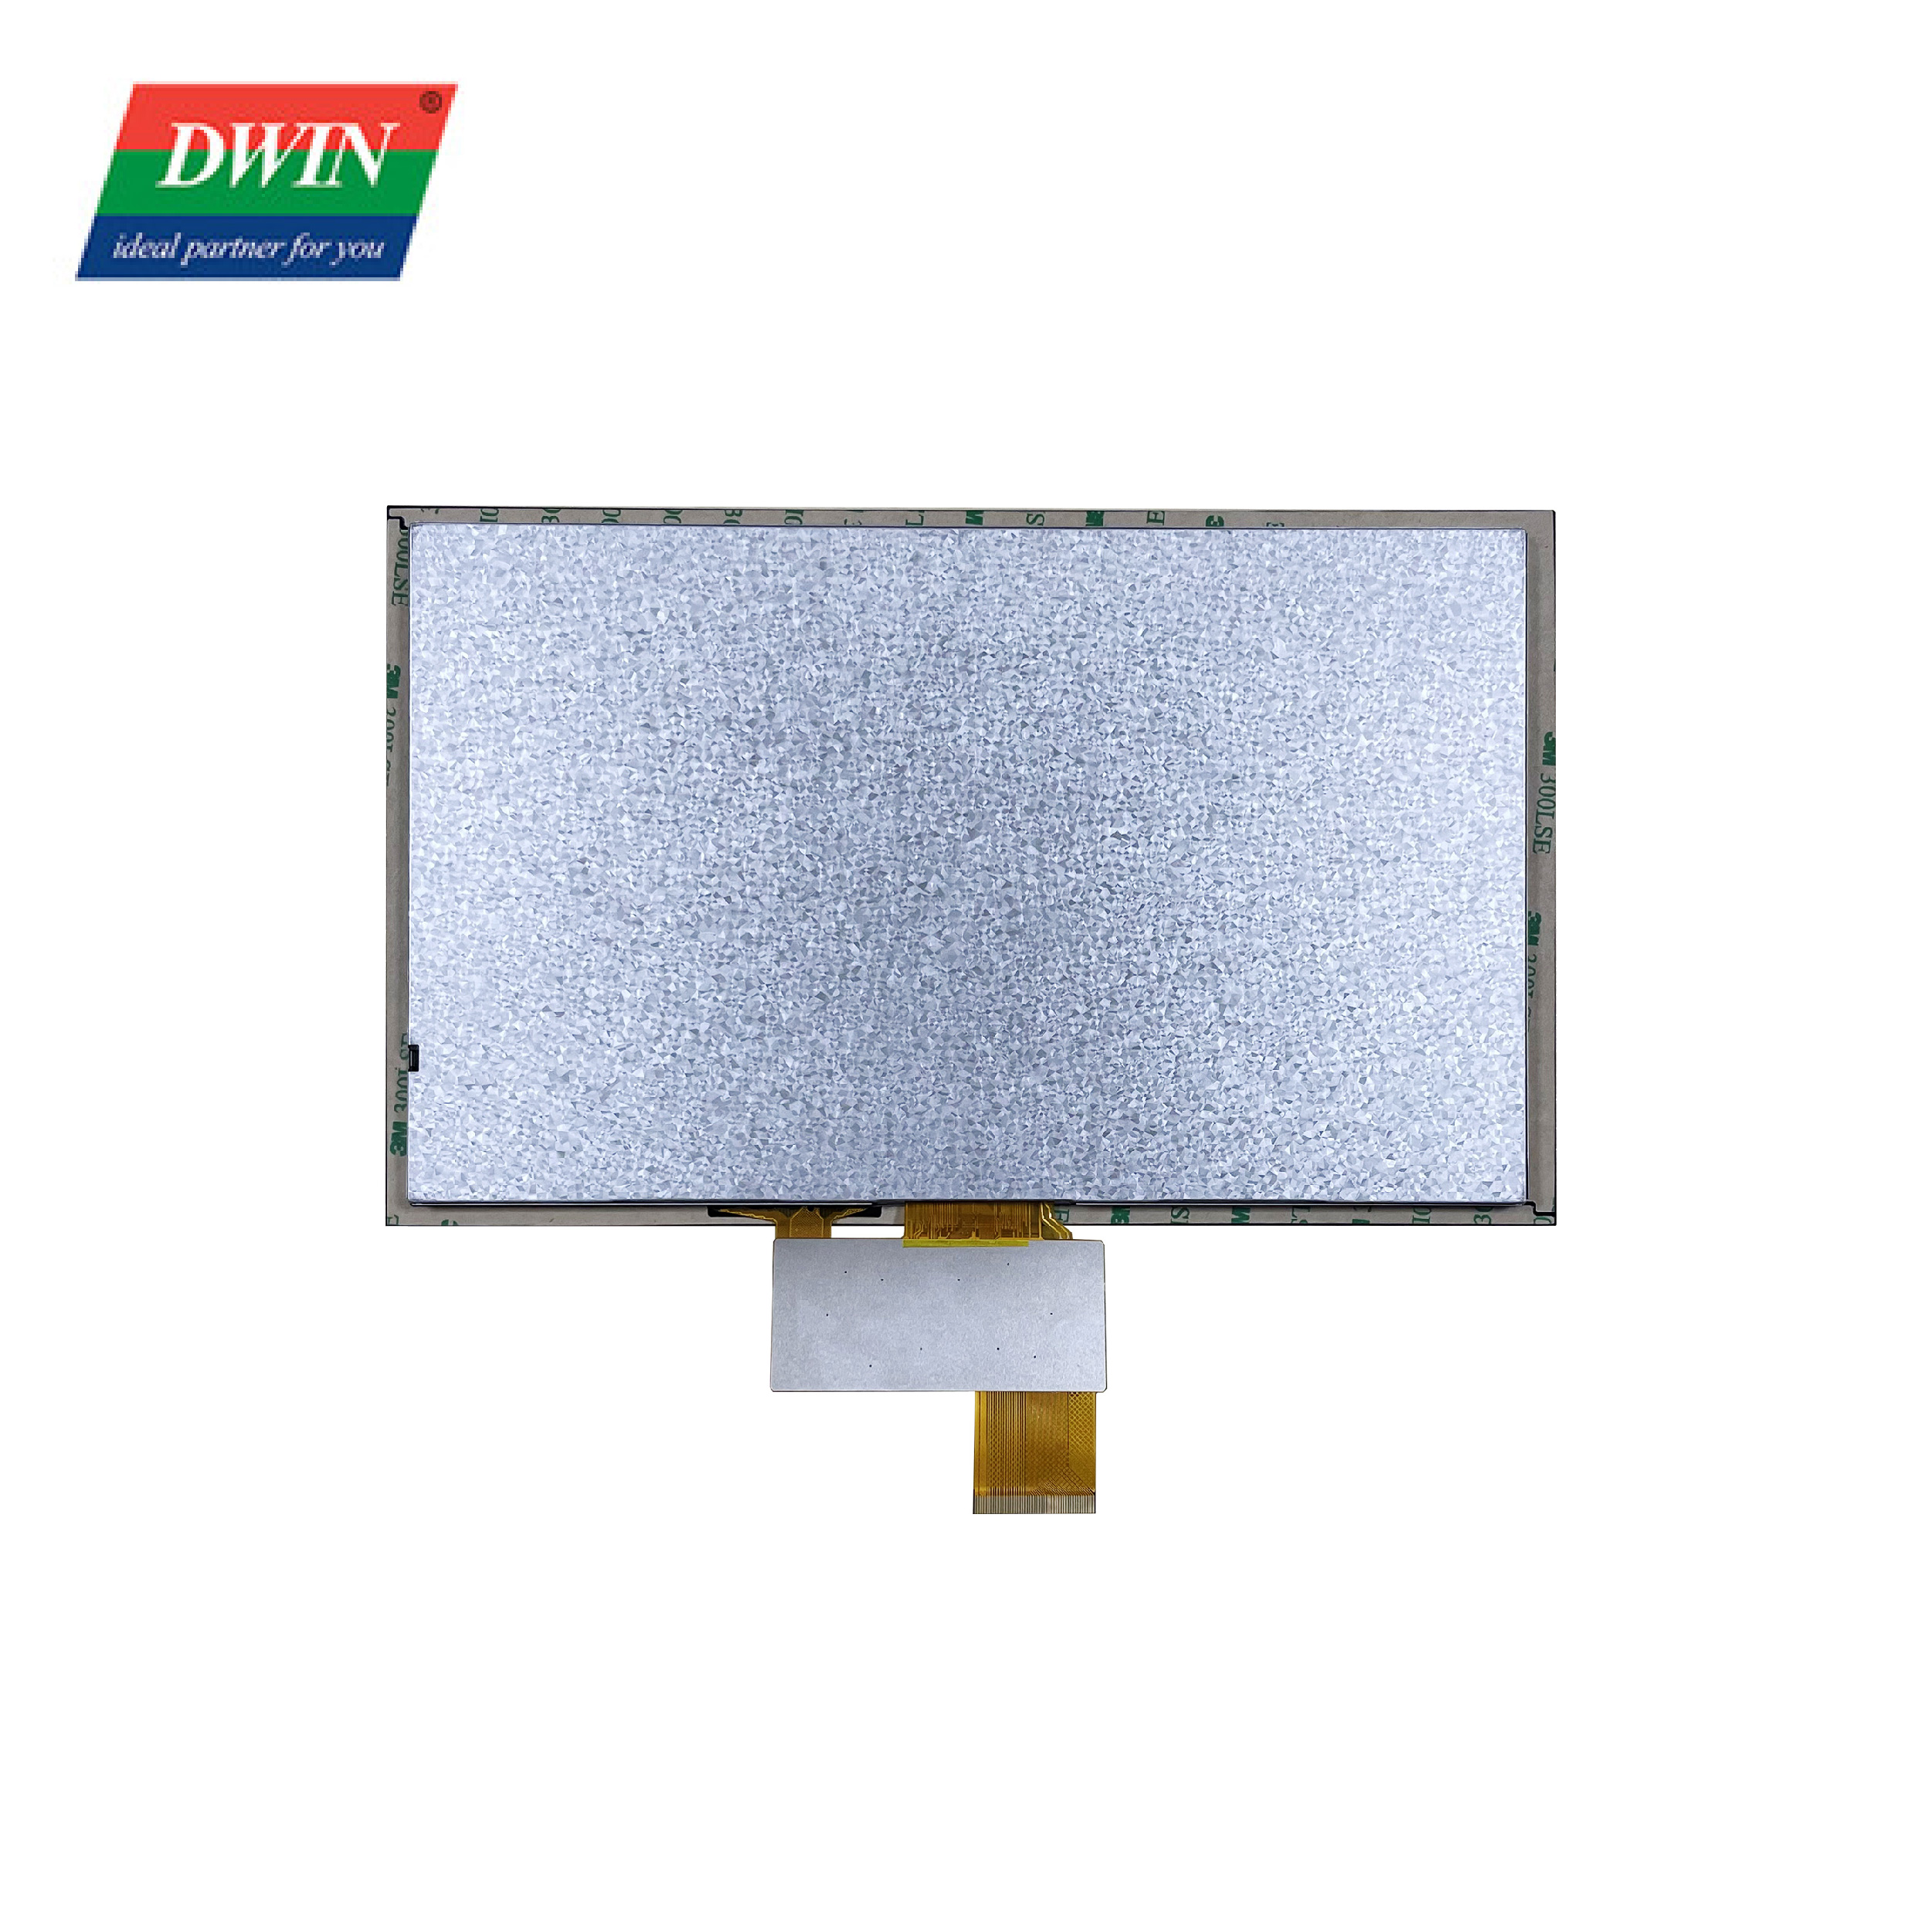 10.1 Inch COF Touchscreen Model: DMG10600F101_01 (COF Series)